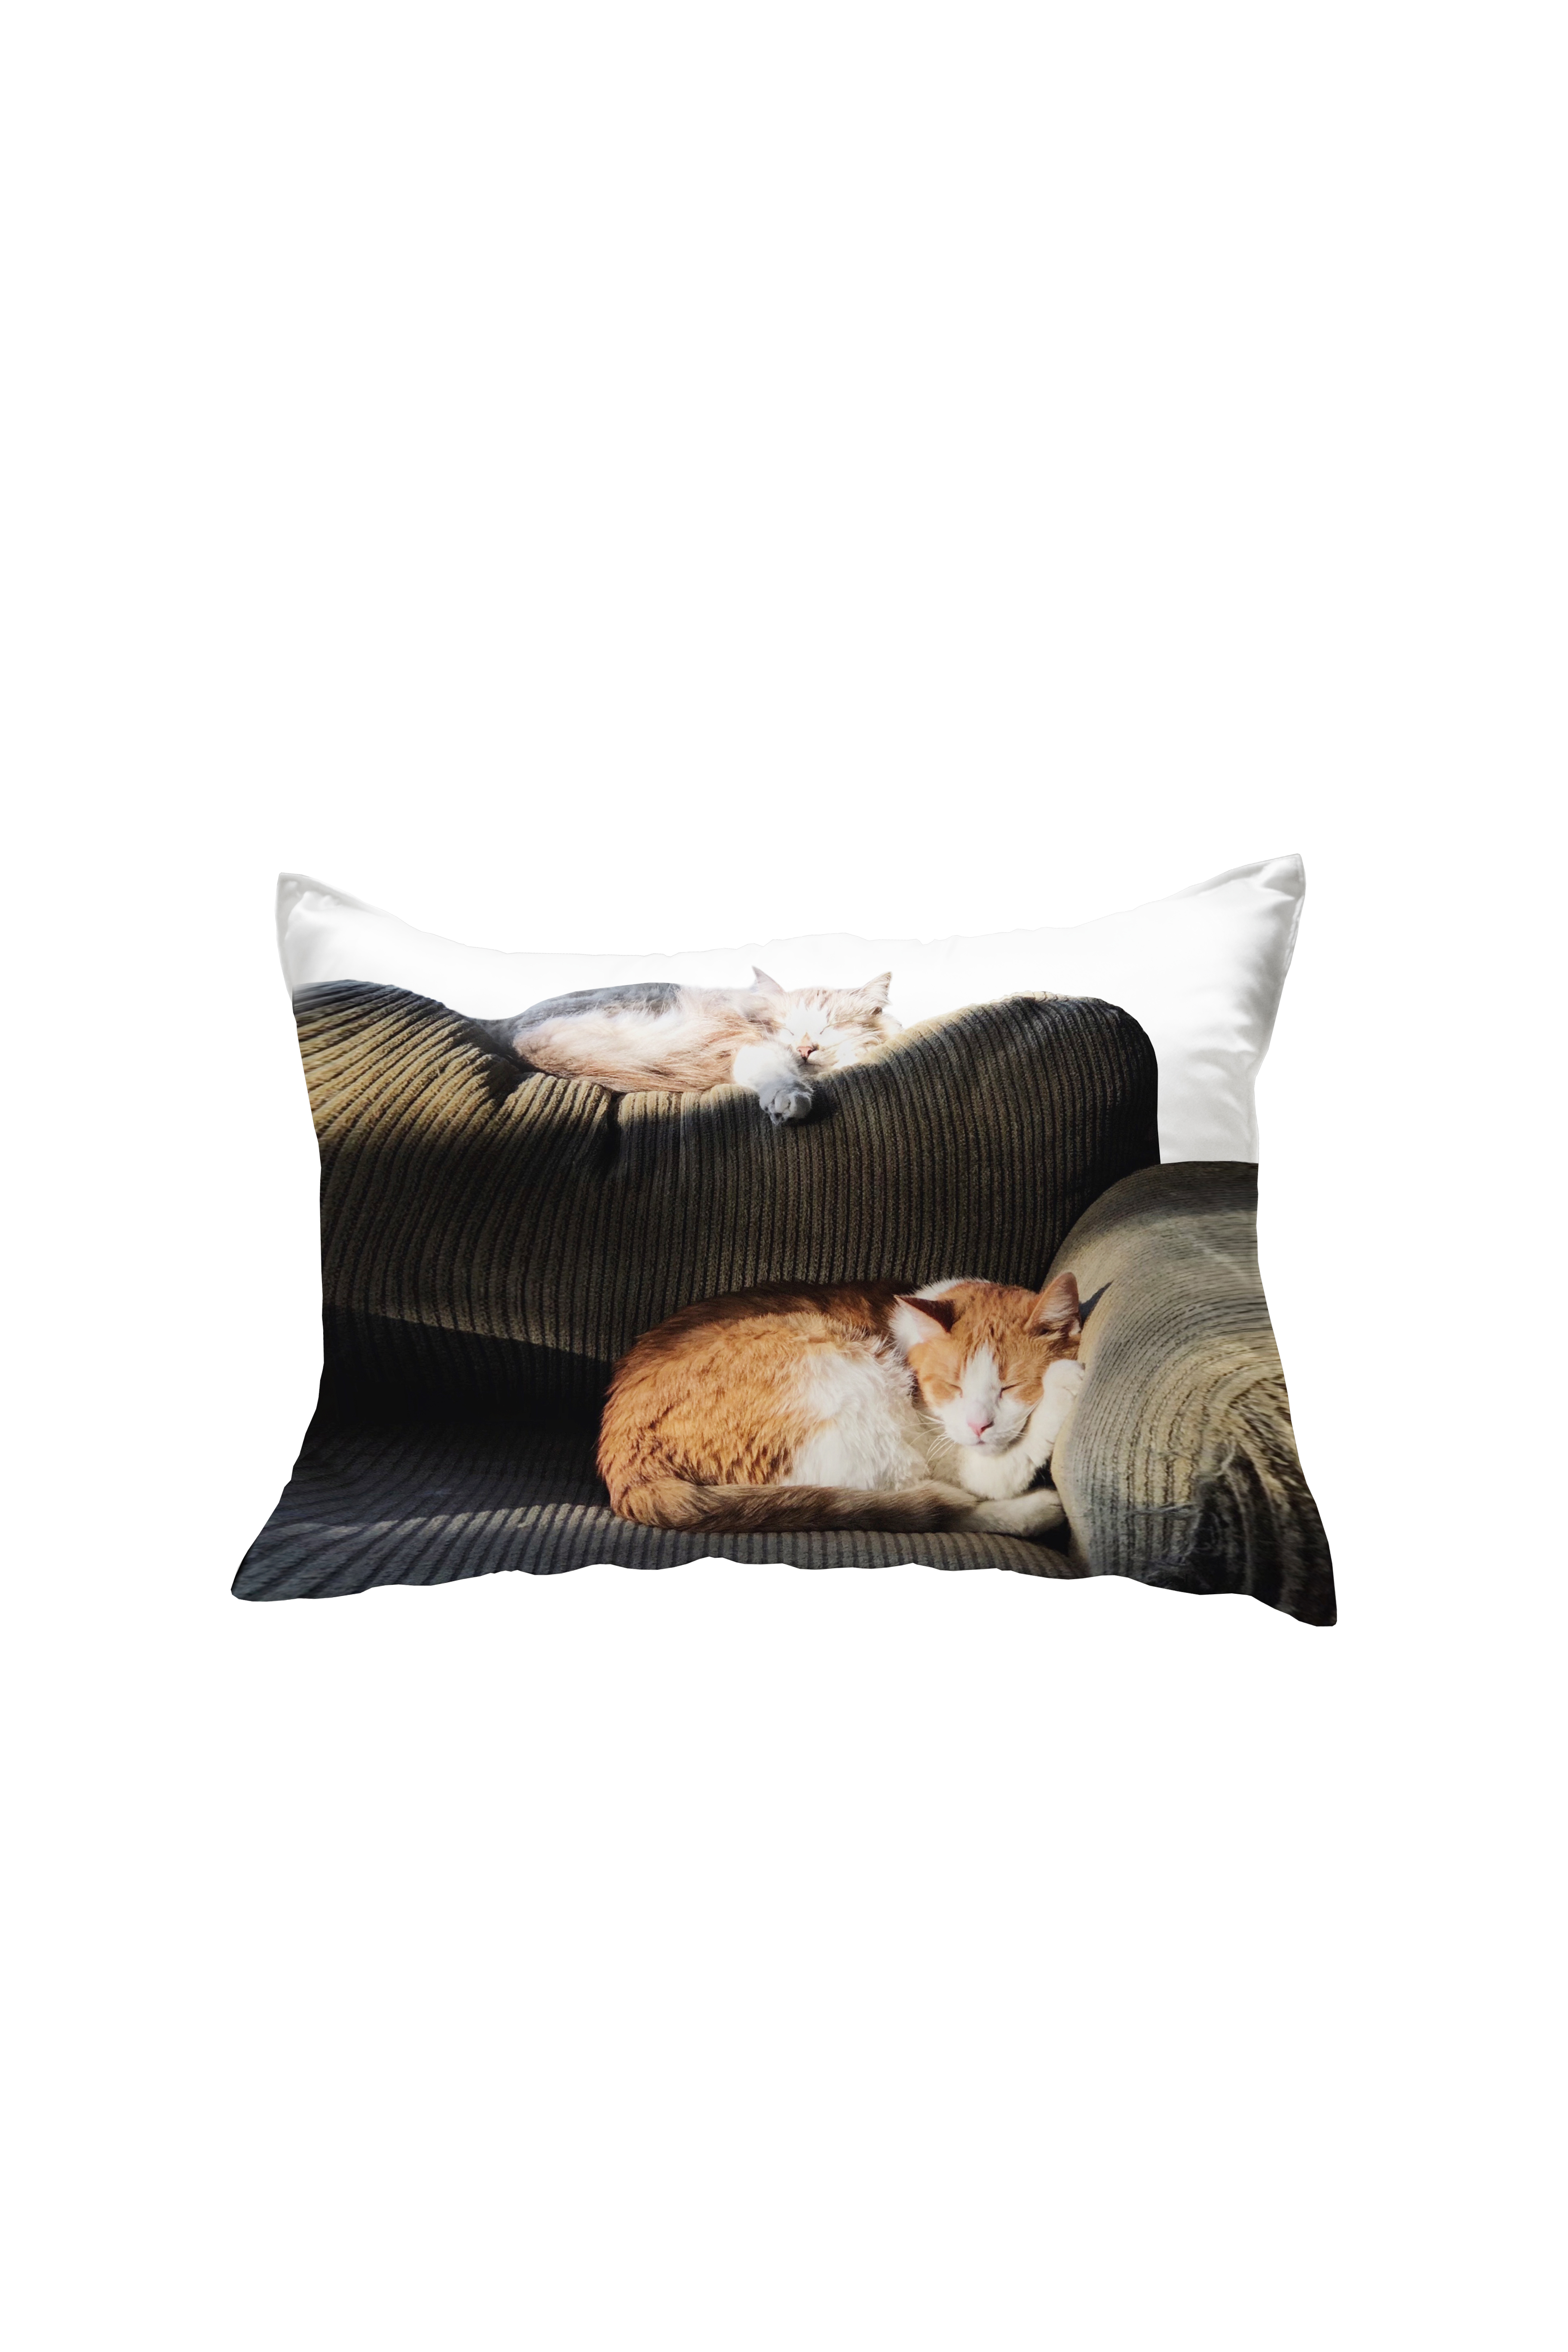 sofa cat pillow cover